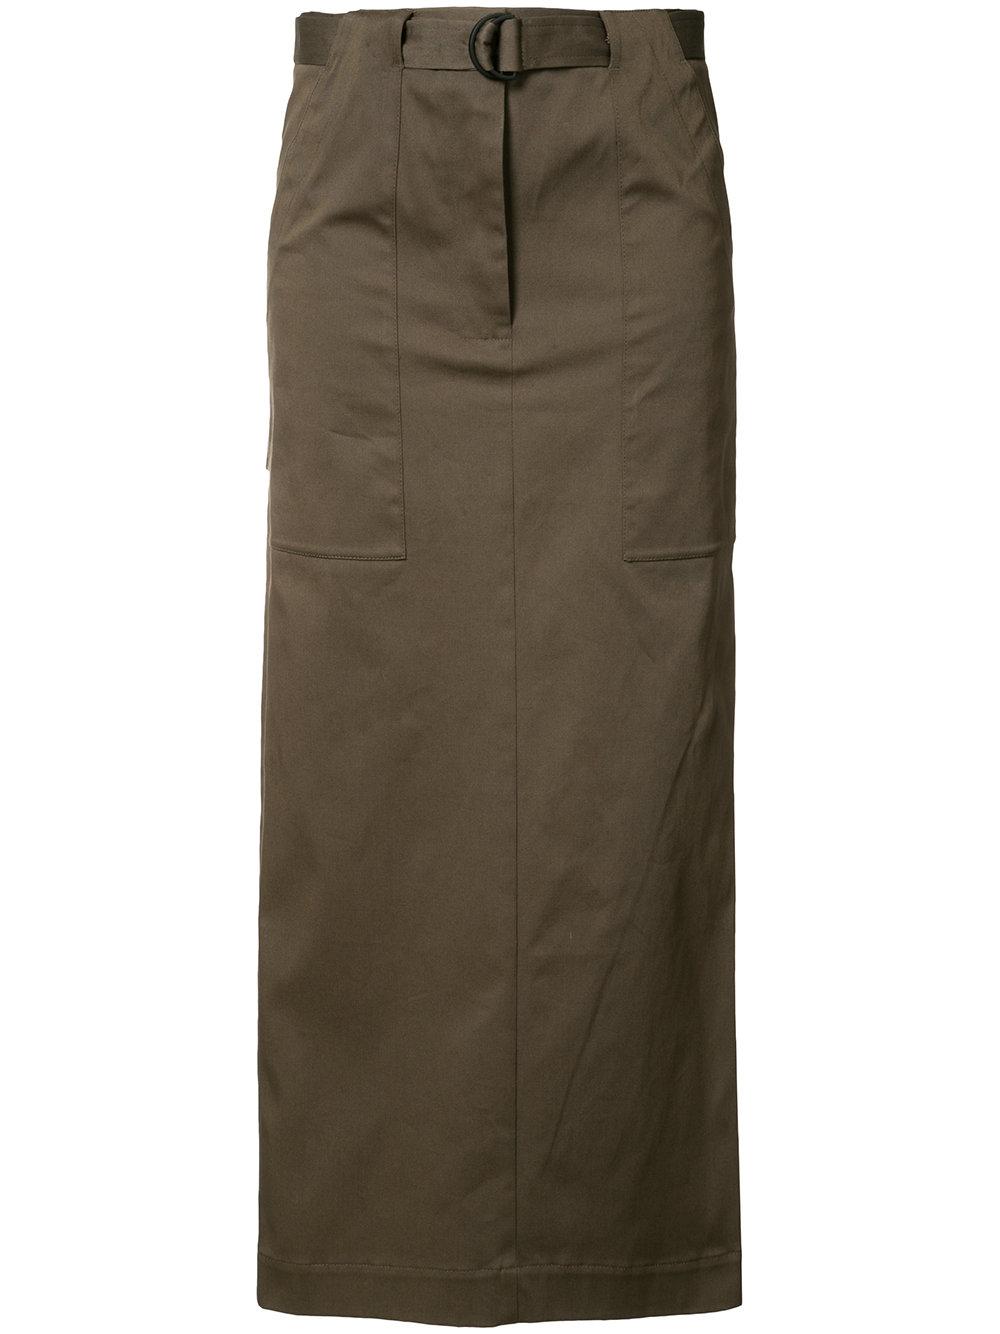 Lyst - Josh Goot Utility Skirt in Green